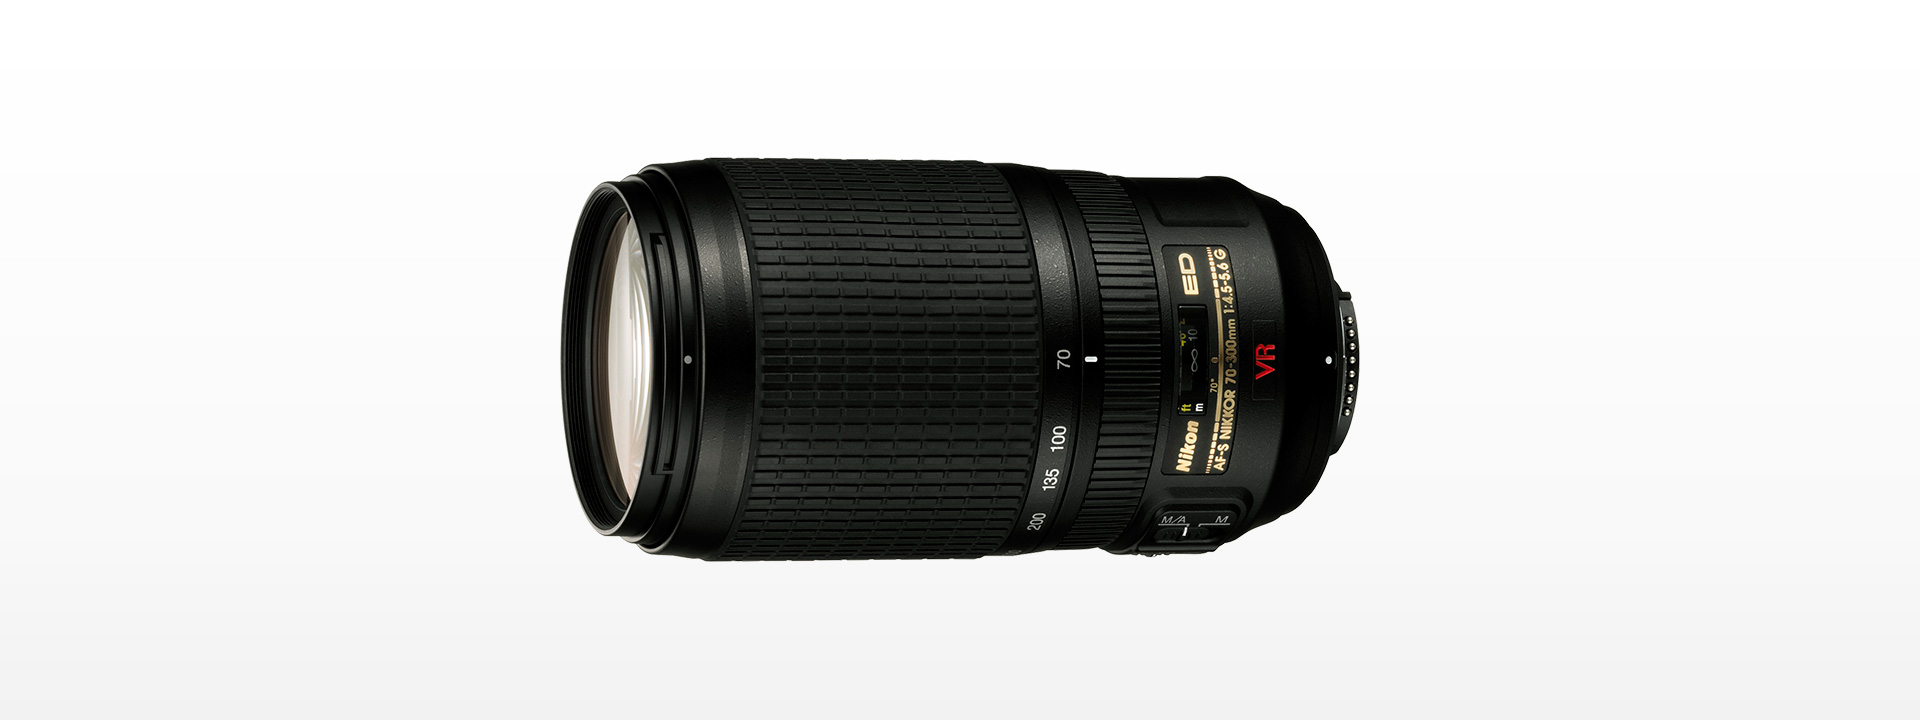 Nikon AF-S NIKKOR 70-300mm フルサイズ対応フルサイズ対応の望遠レンズです